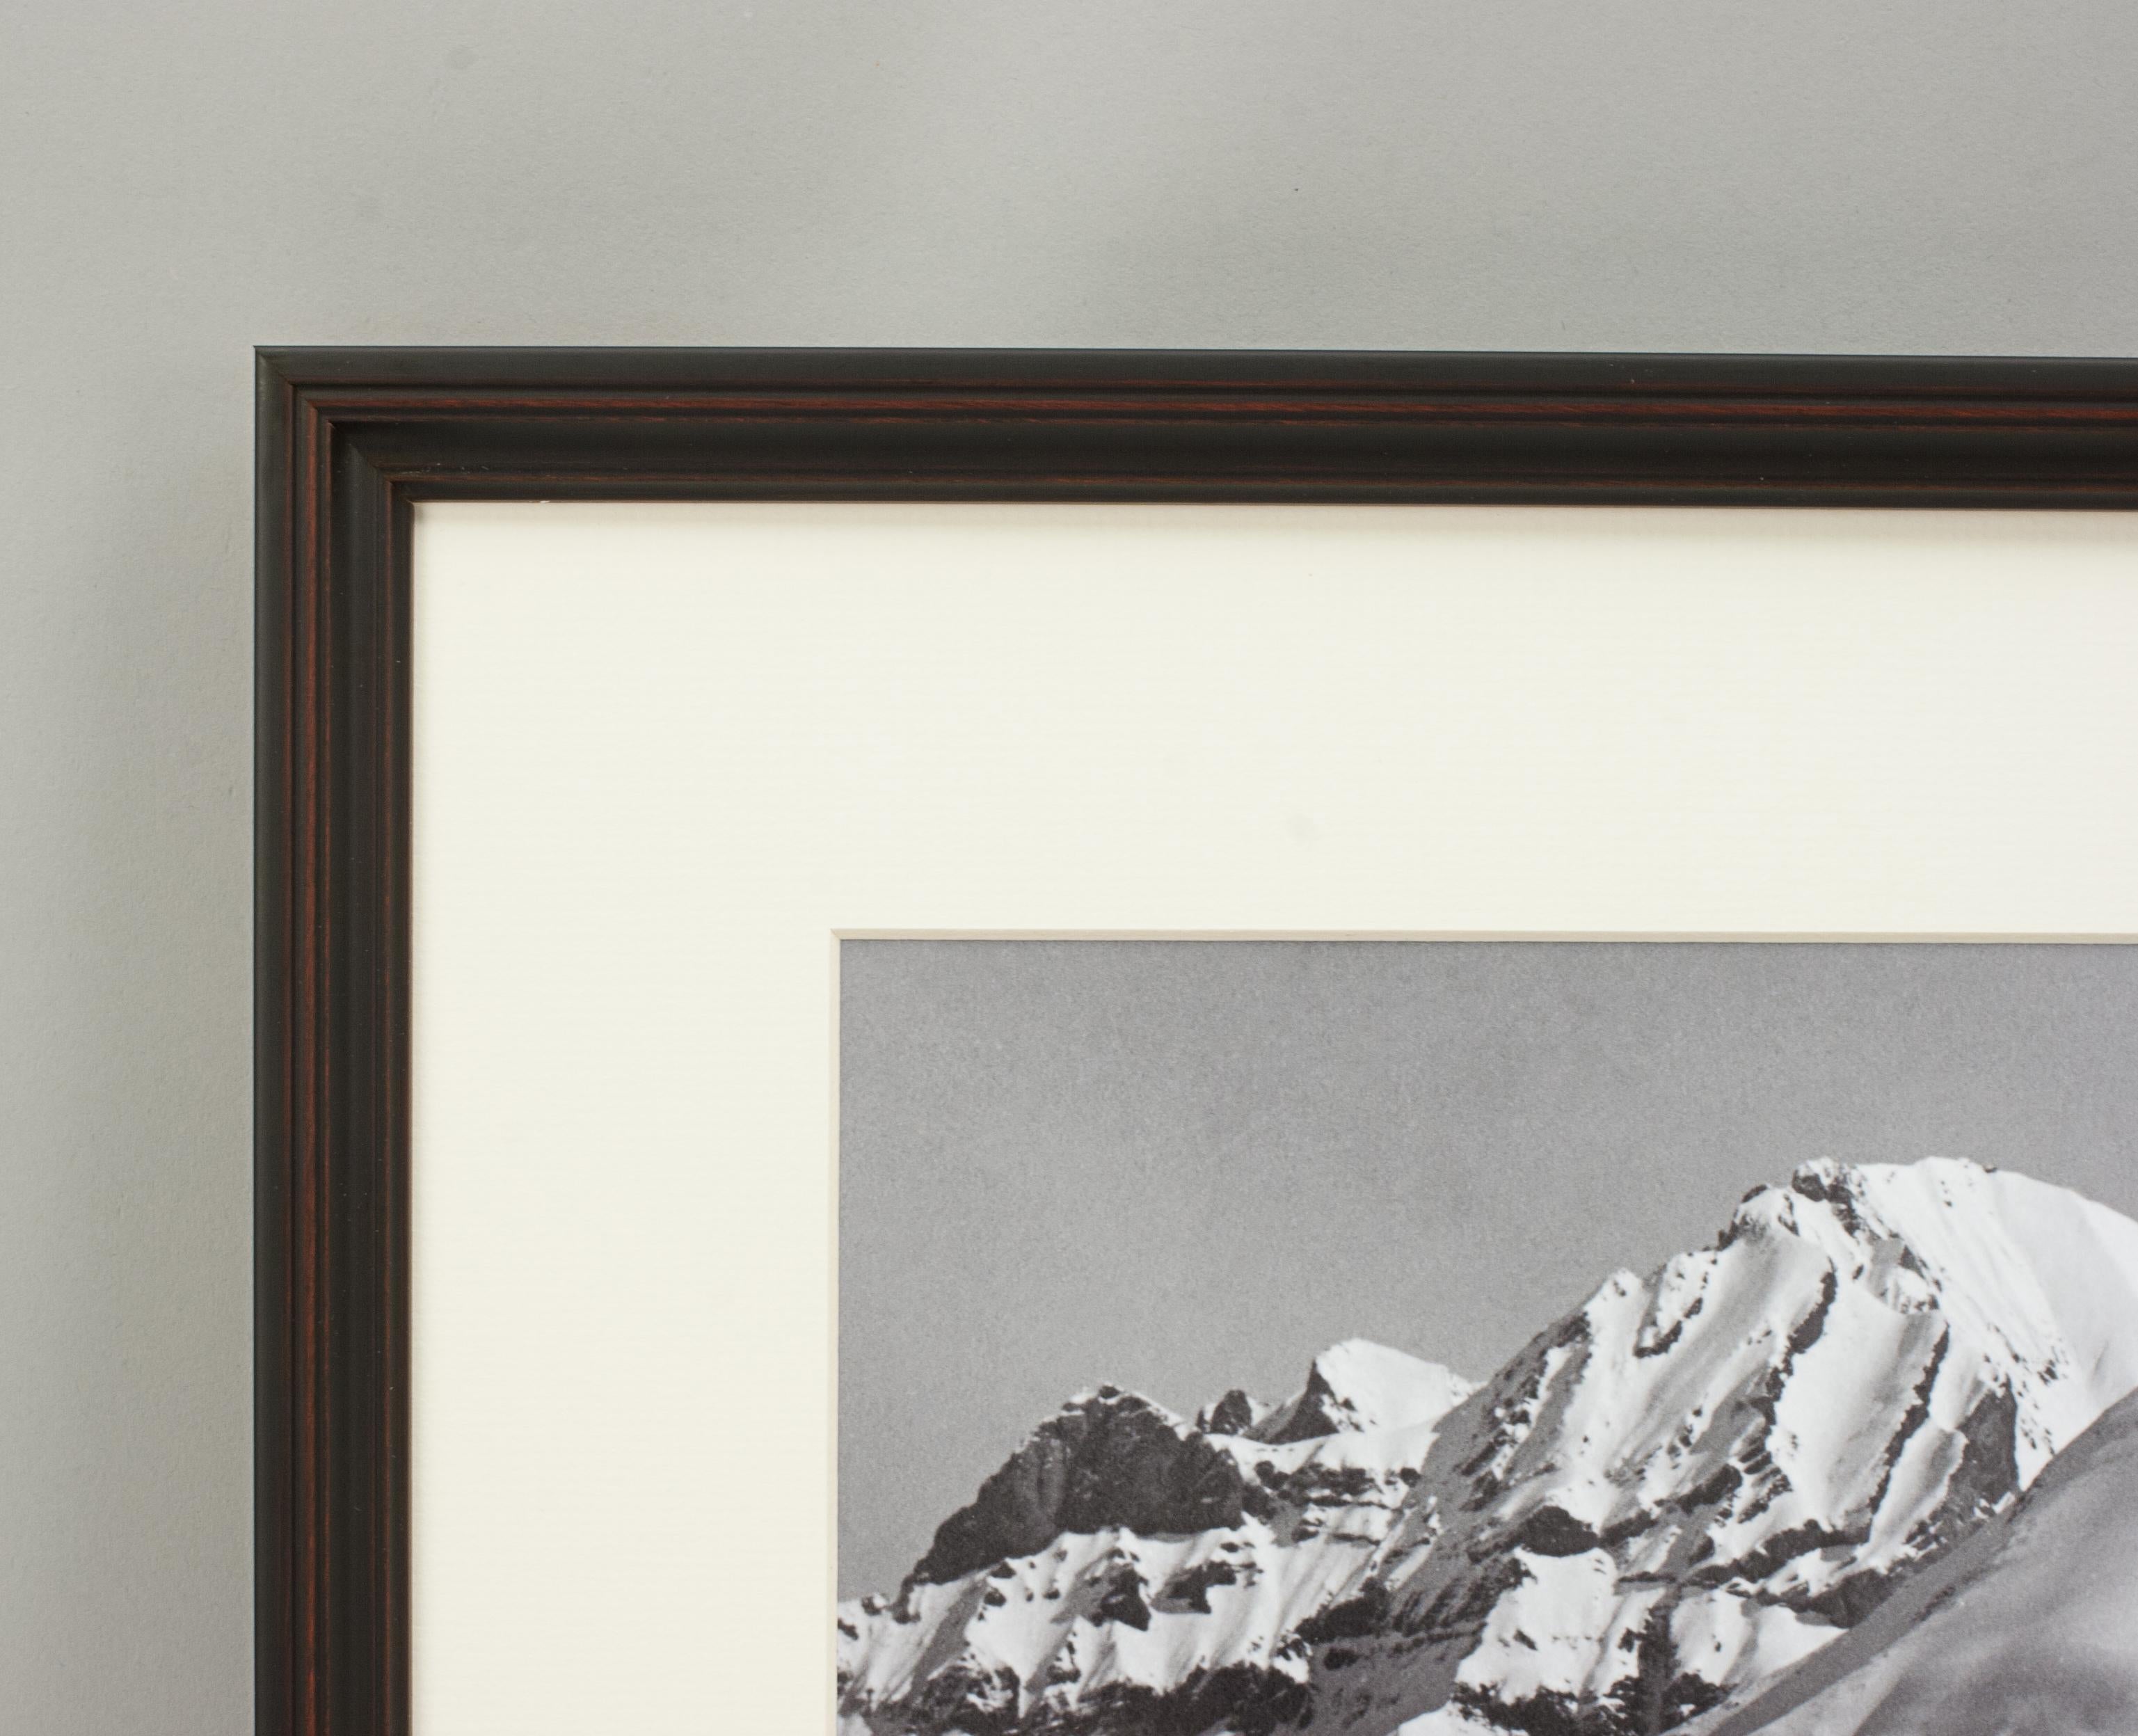 Paper Vintage Alpine Photograph, Climber, Simelistock, Switzerland For Sale